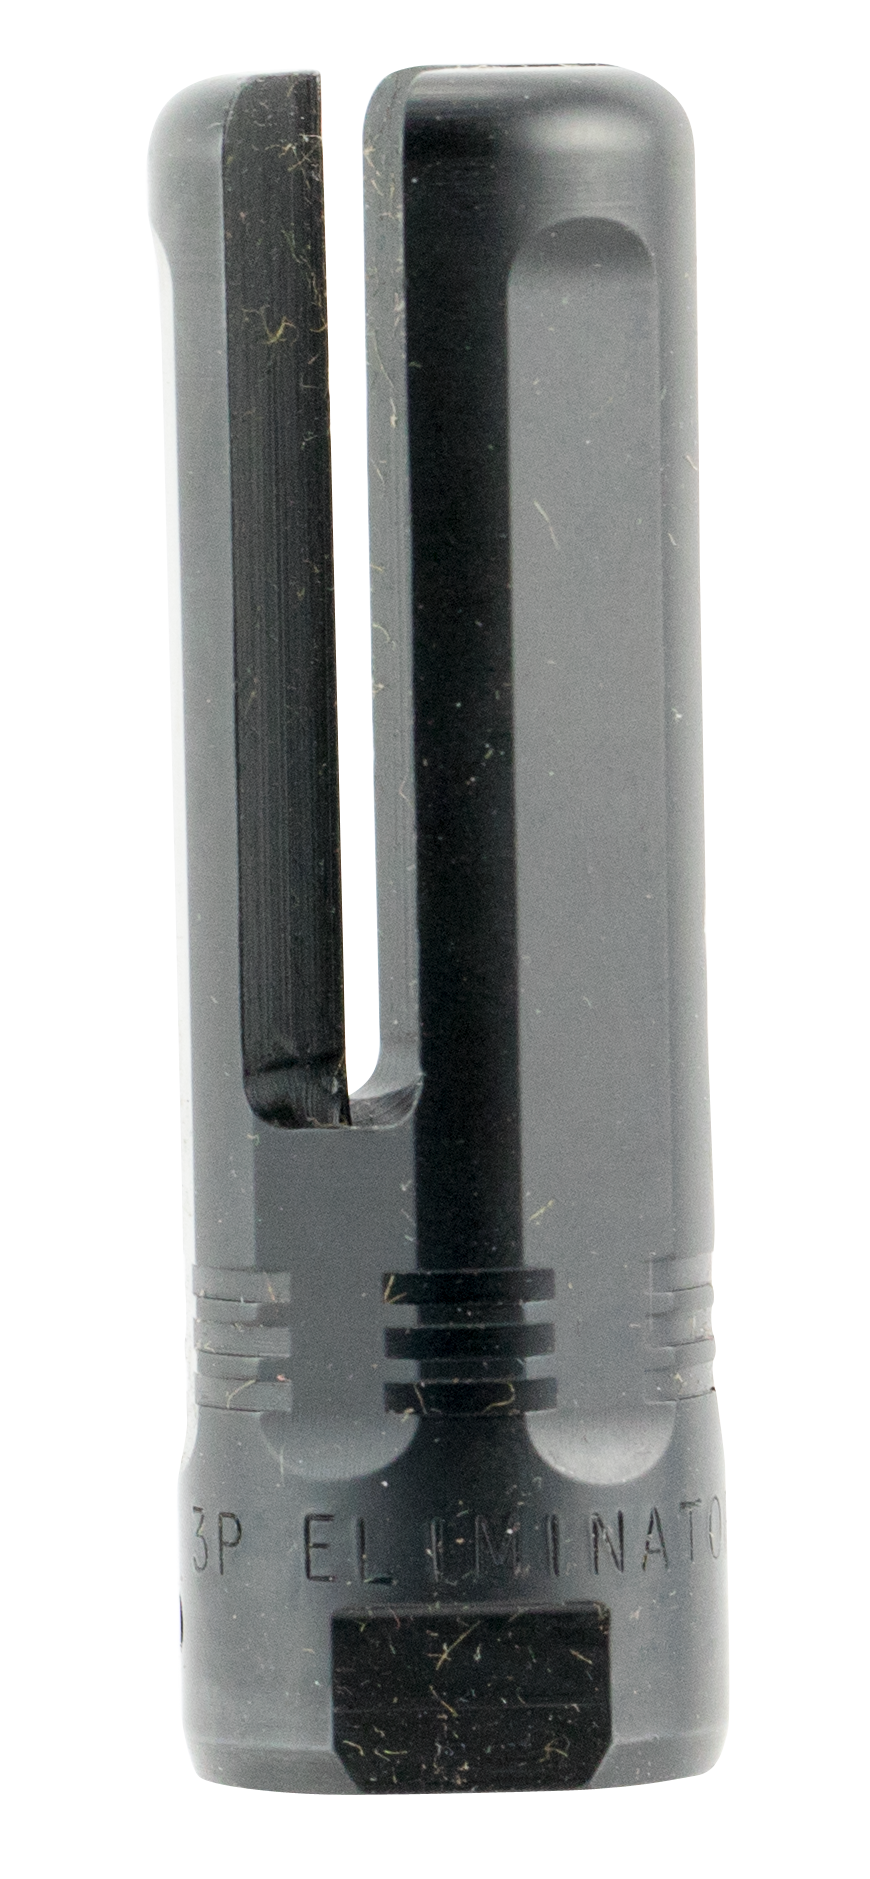 Plastic Adjustable Shoulder Straps - 3/8 X 19 - 1 Pair/Pack - Clear